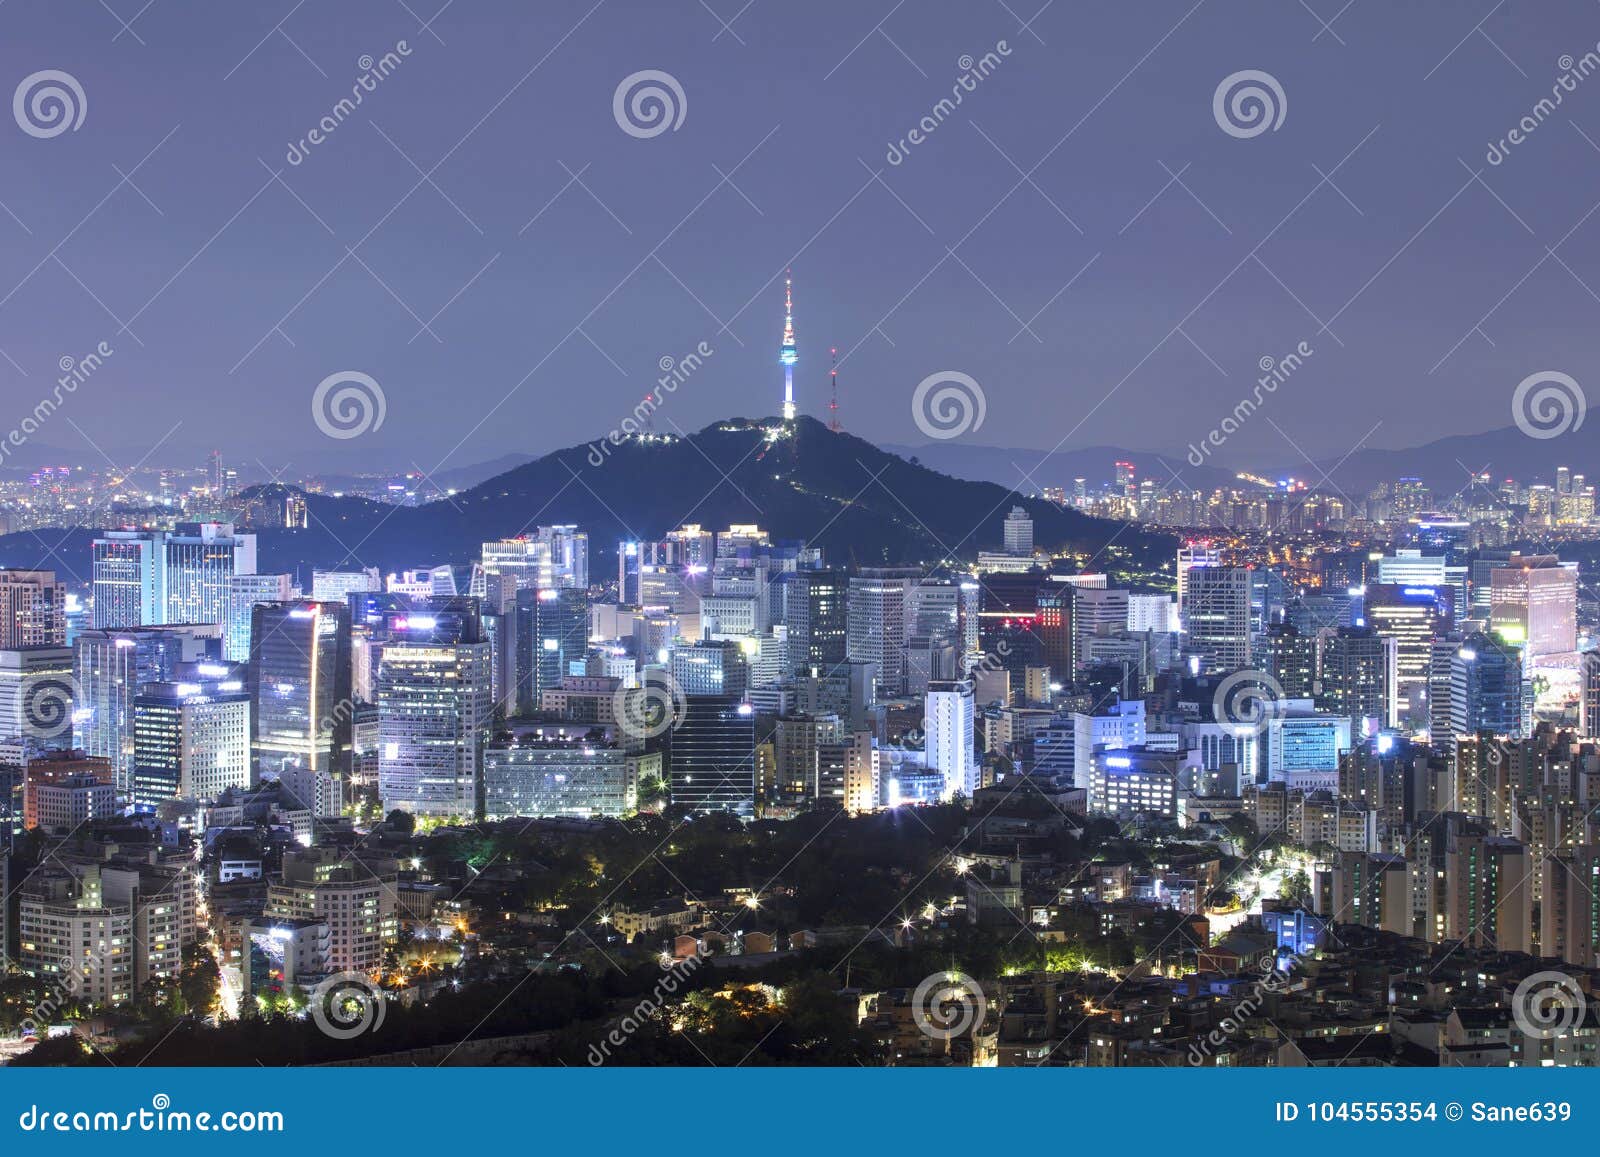 Seoul South Korea City Skyline Stock Photo - Image of metropolitan ...